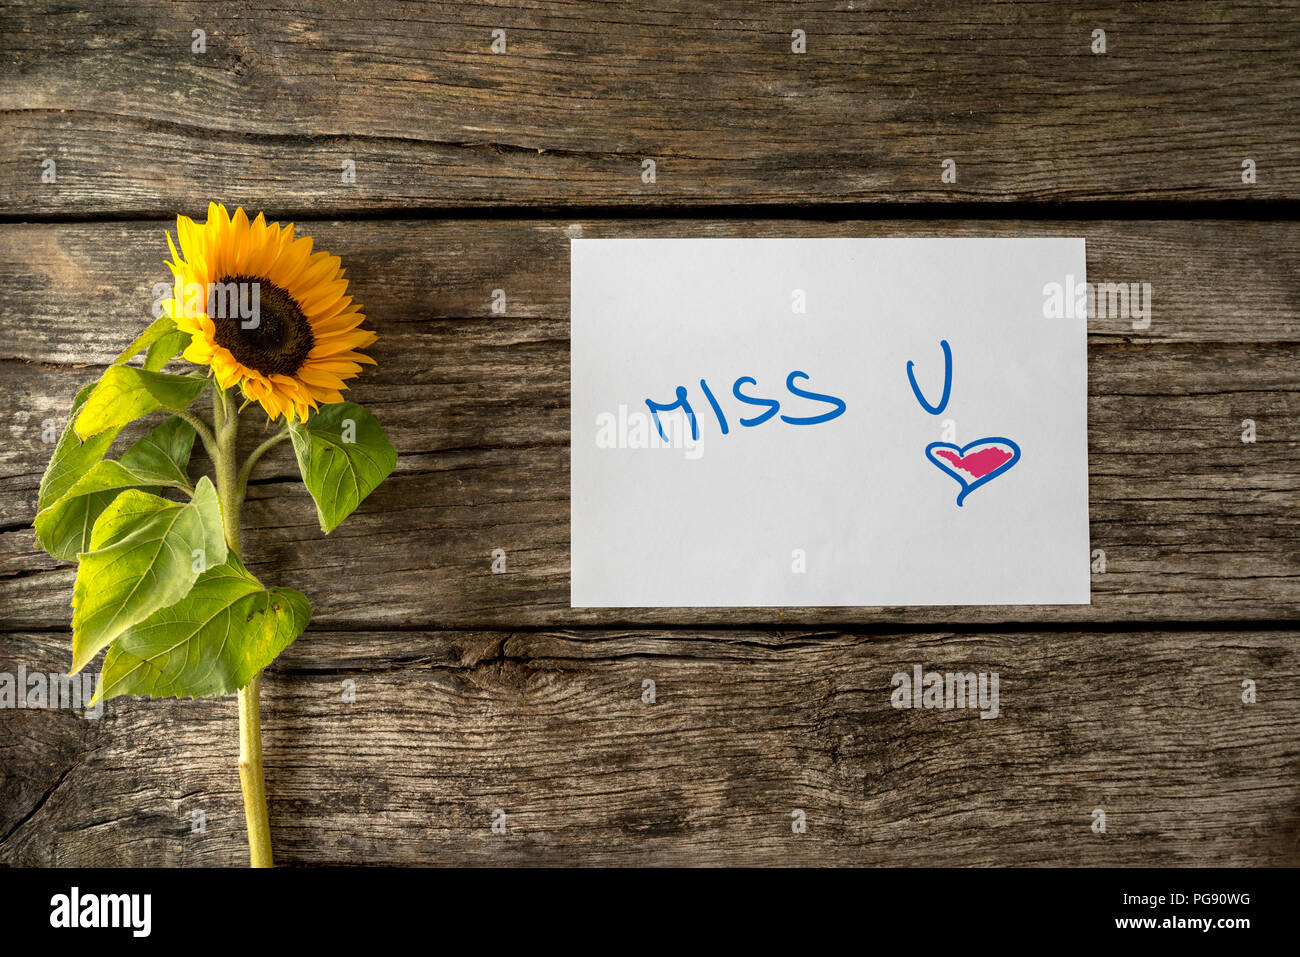 Romantic Miss u message written on white card lying on textured ...